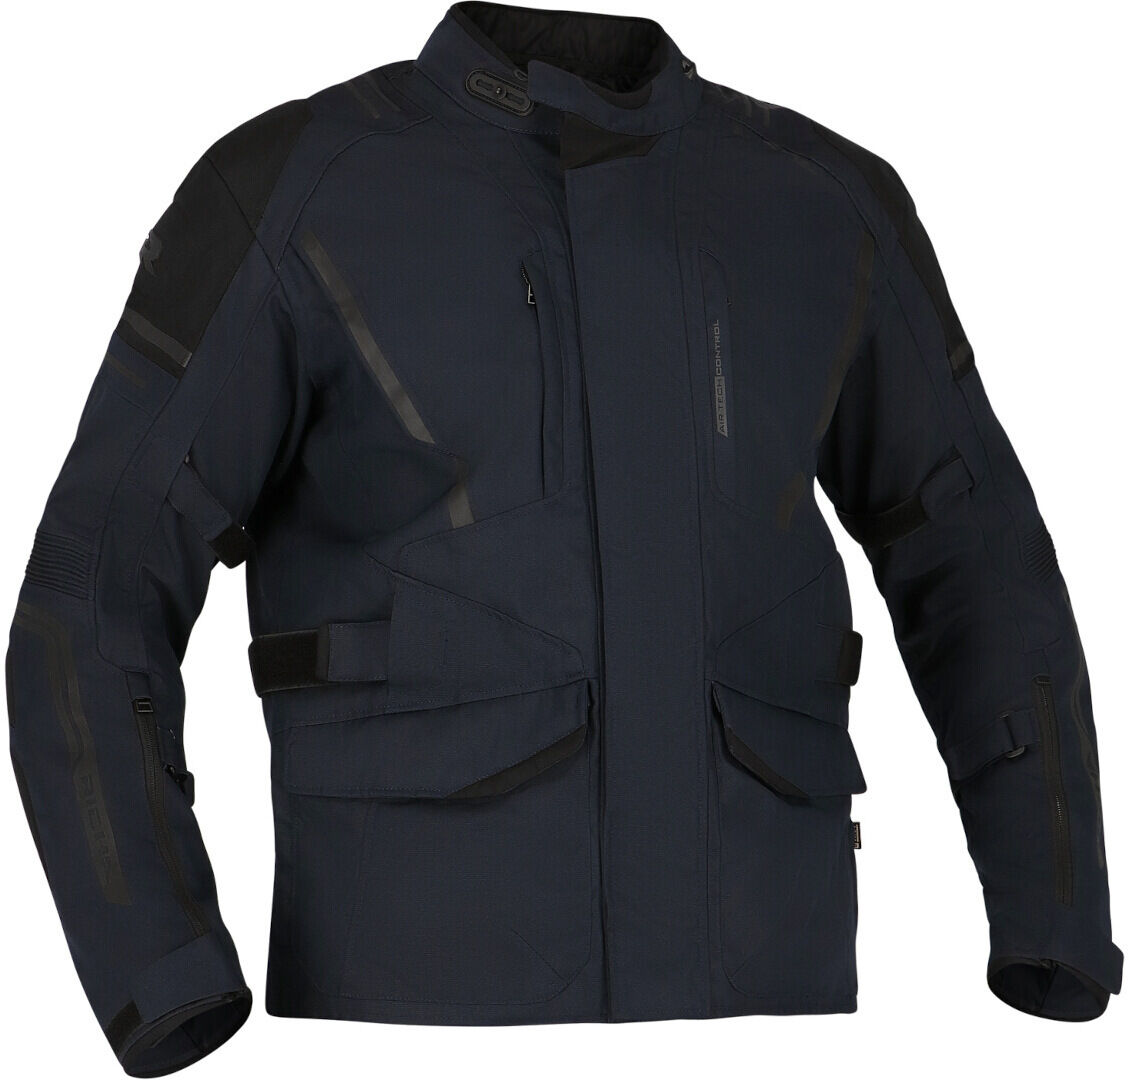 Richa Infinity 3 chaqueta textil impermeable para motocicletas - Negro Azul (L)